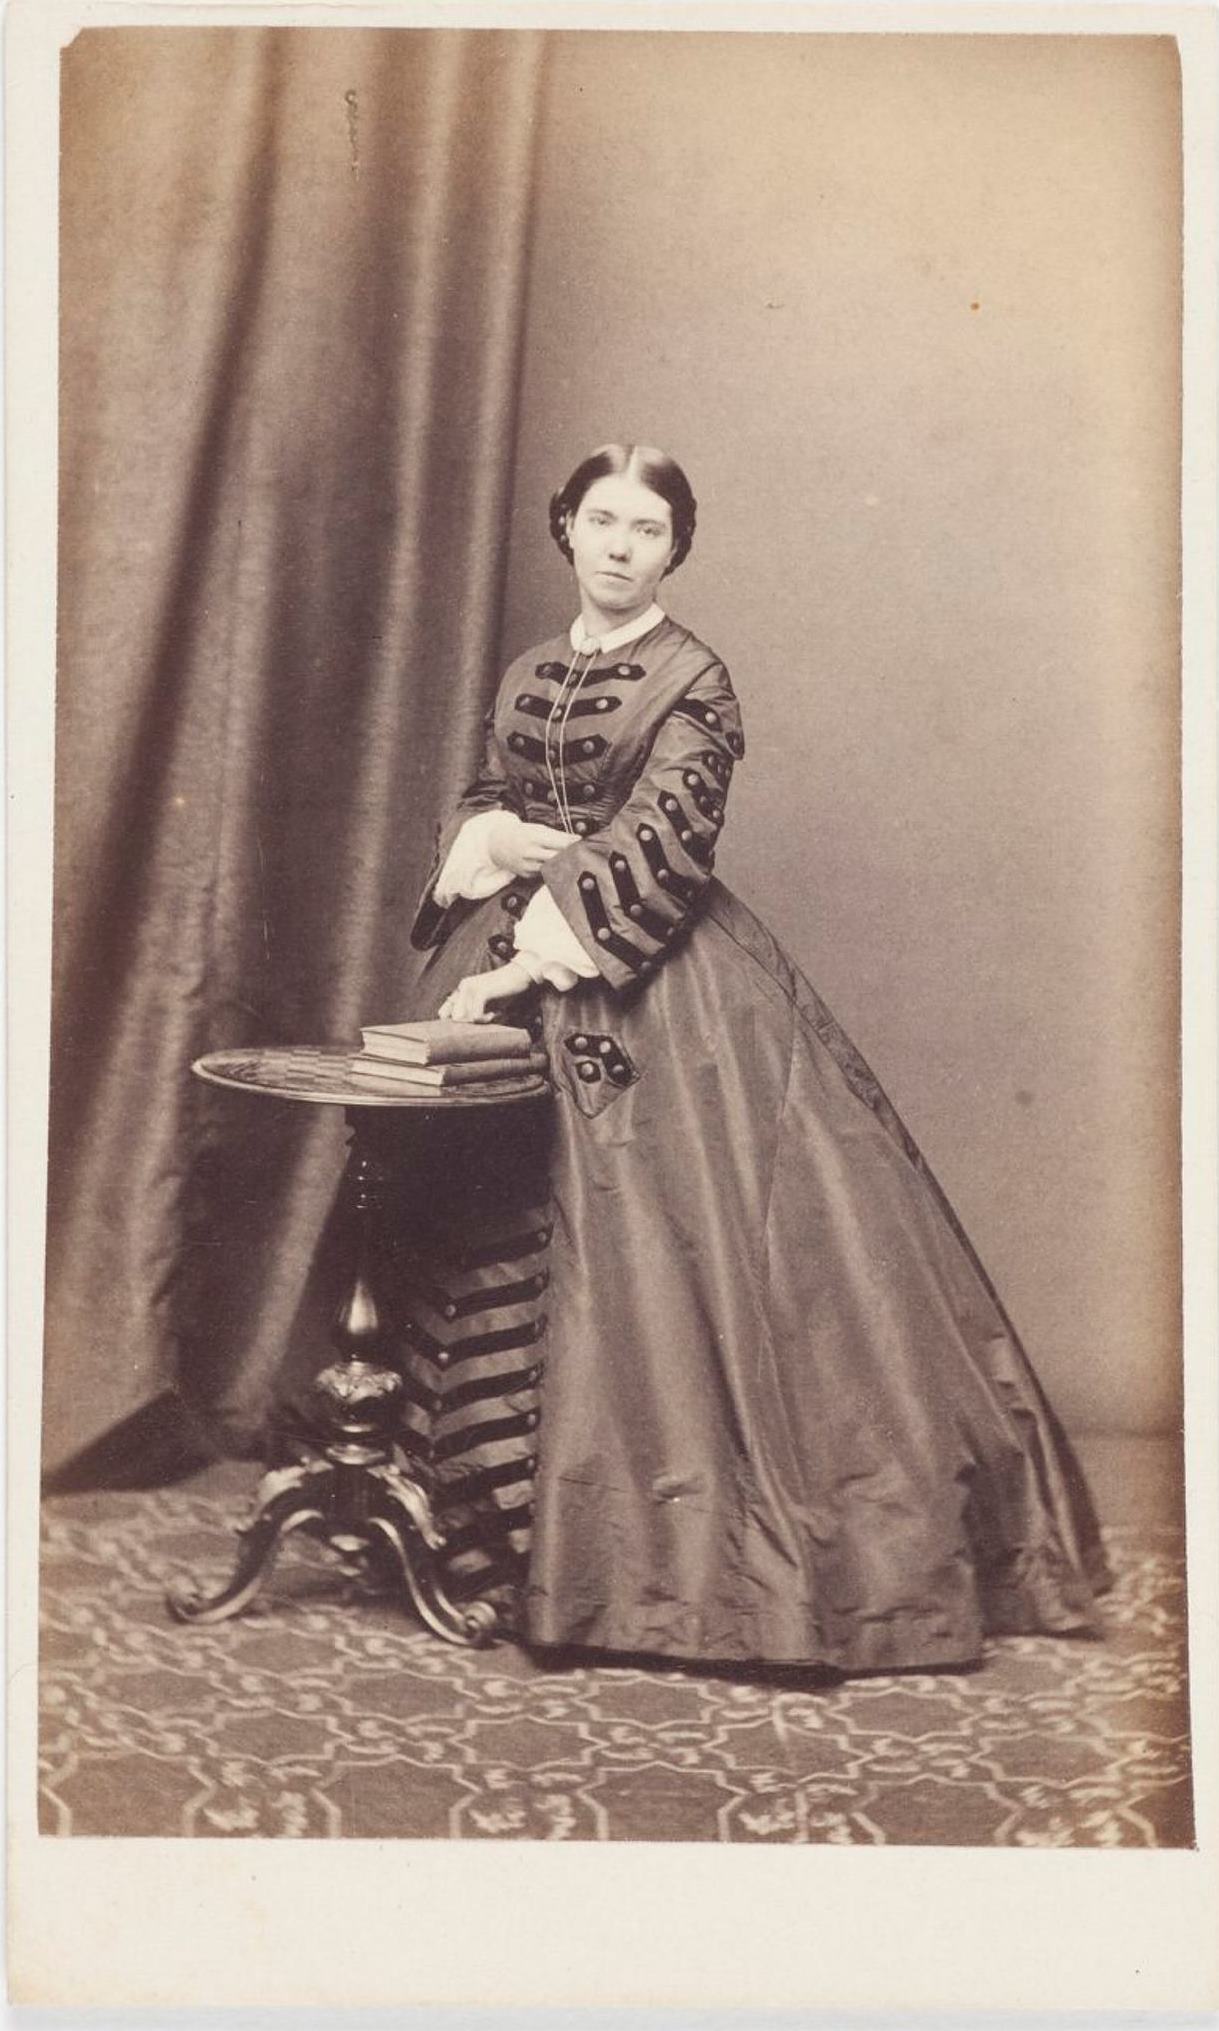 Elizabeth Rouse (1845-1931), around 1866 / Dalton's Royal Photographic Gallery, Sydney